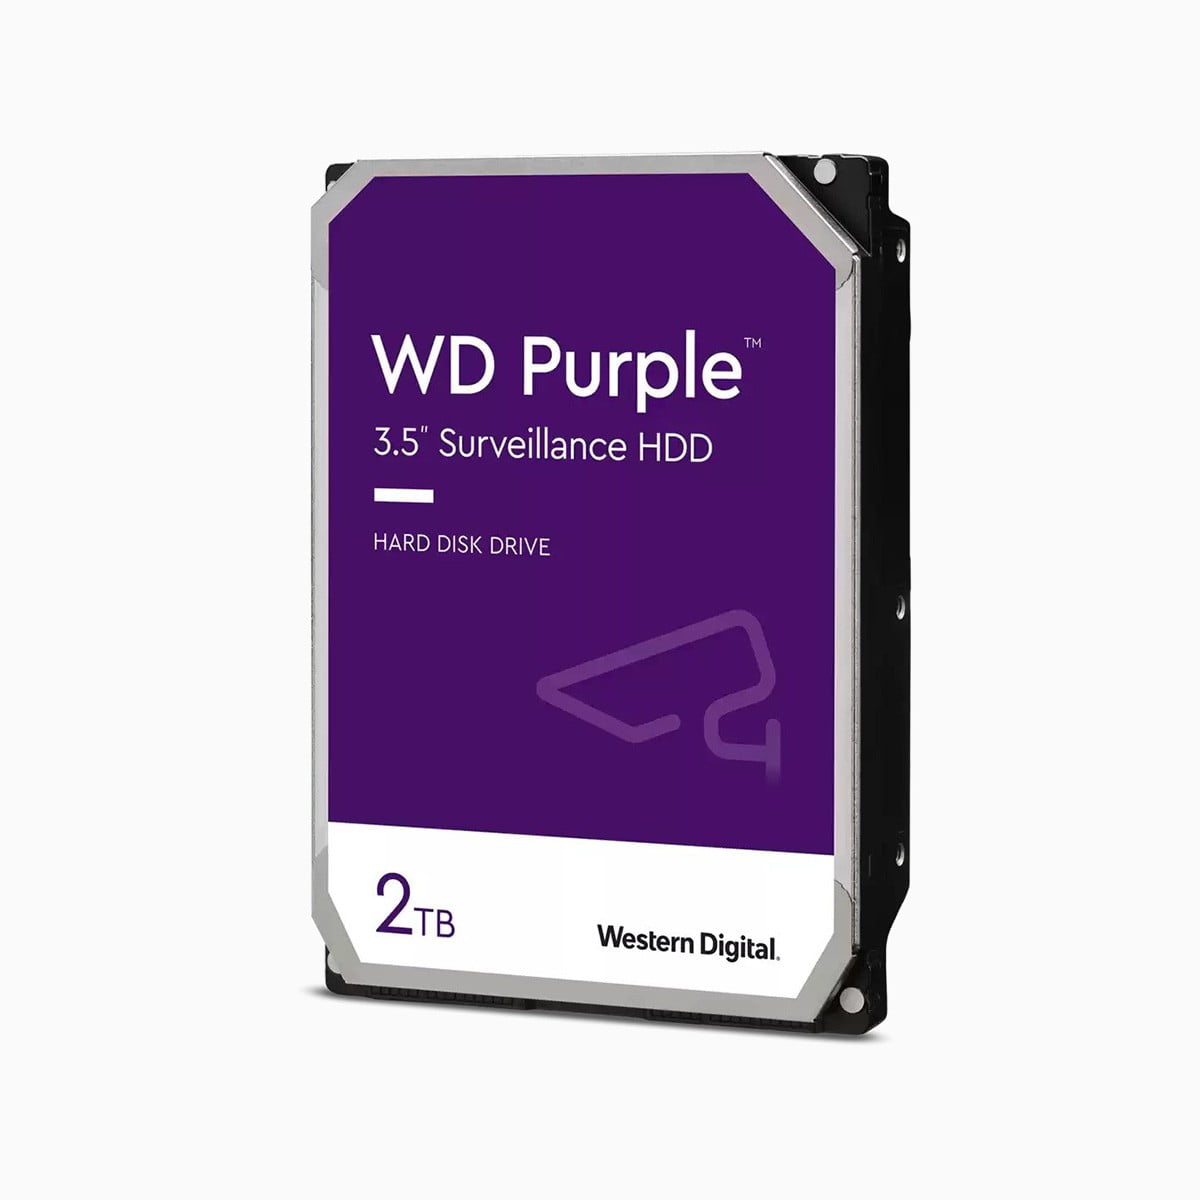 WD Purple 2TB 3.5" SATA III Surveillance Hard Drive